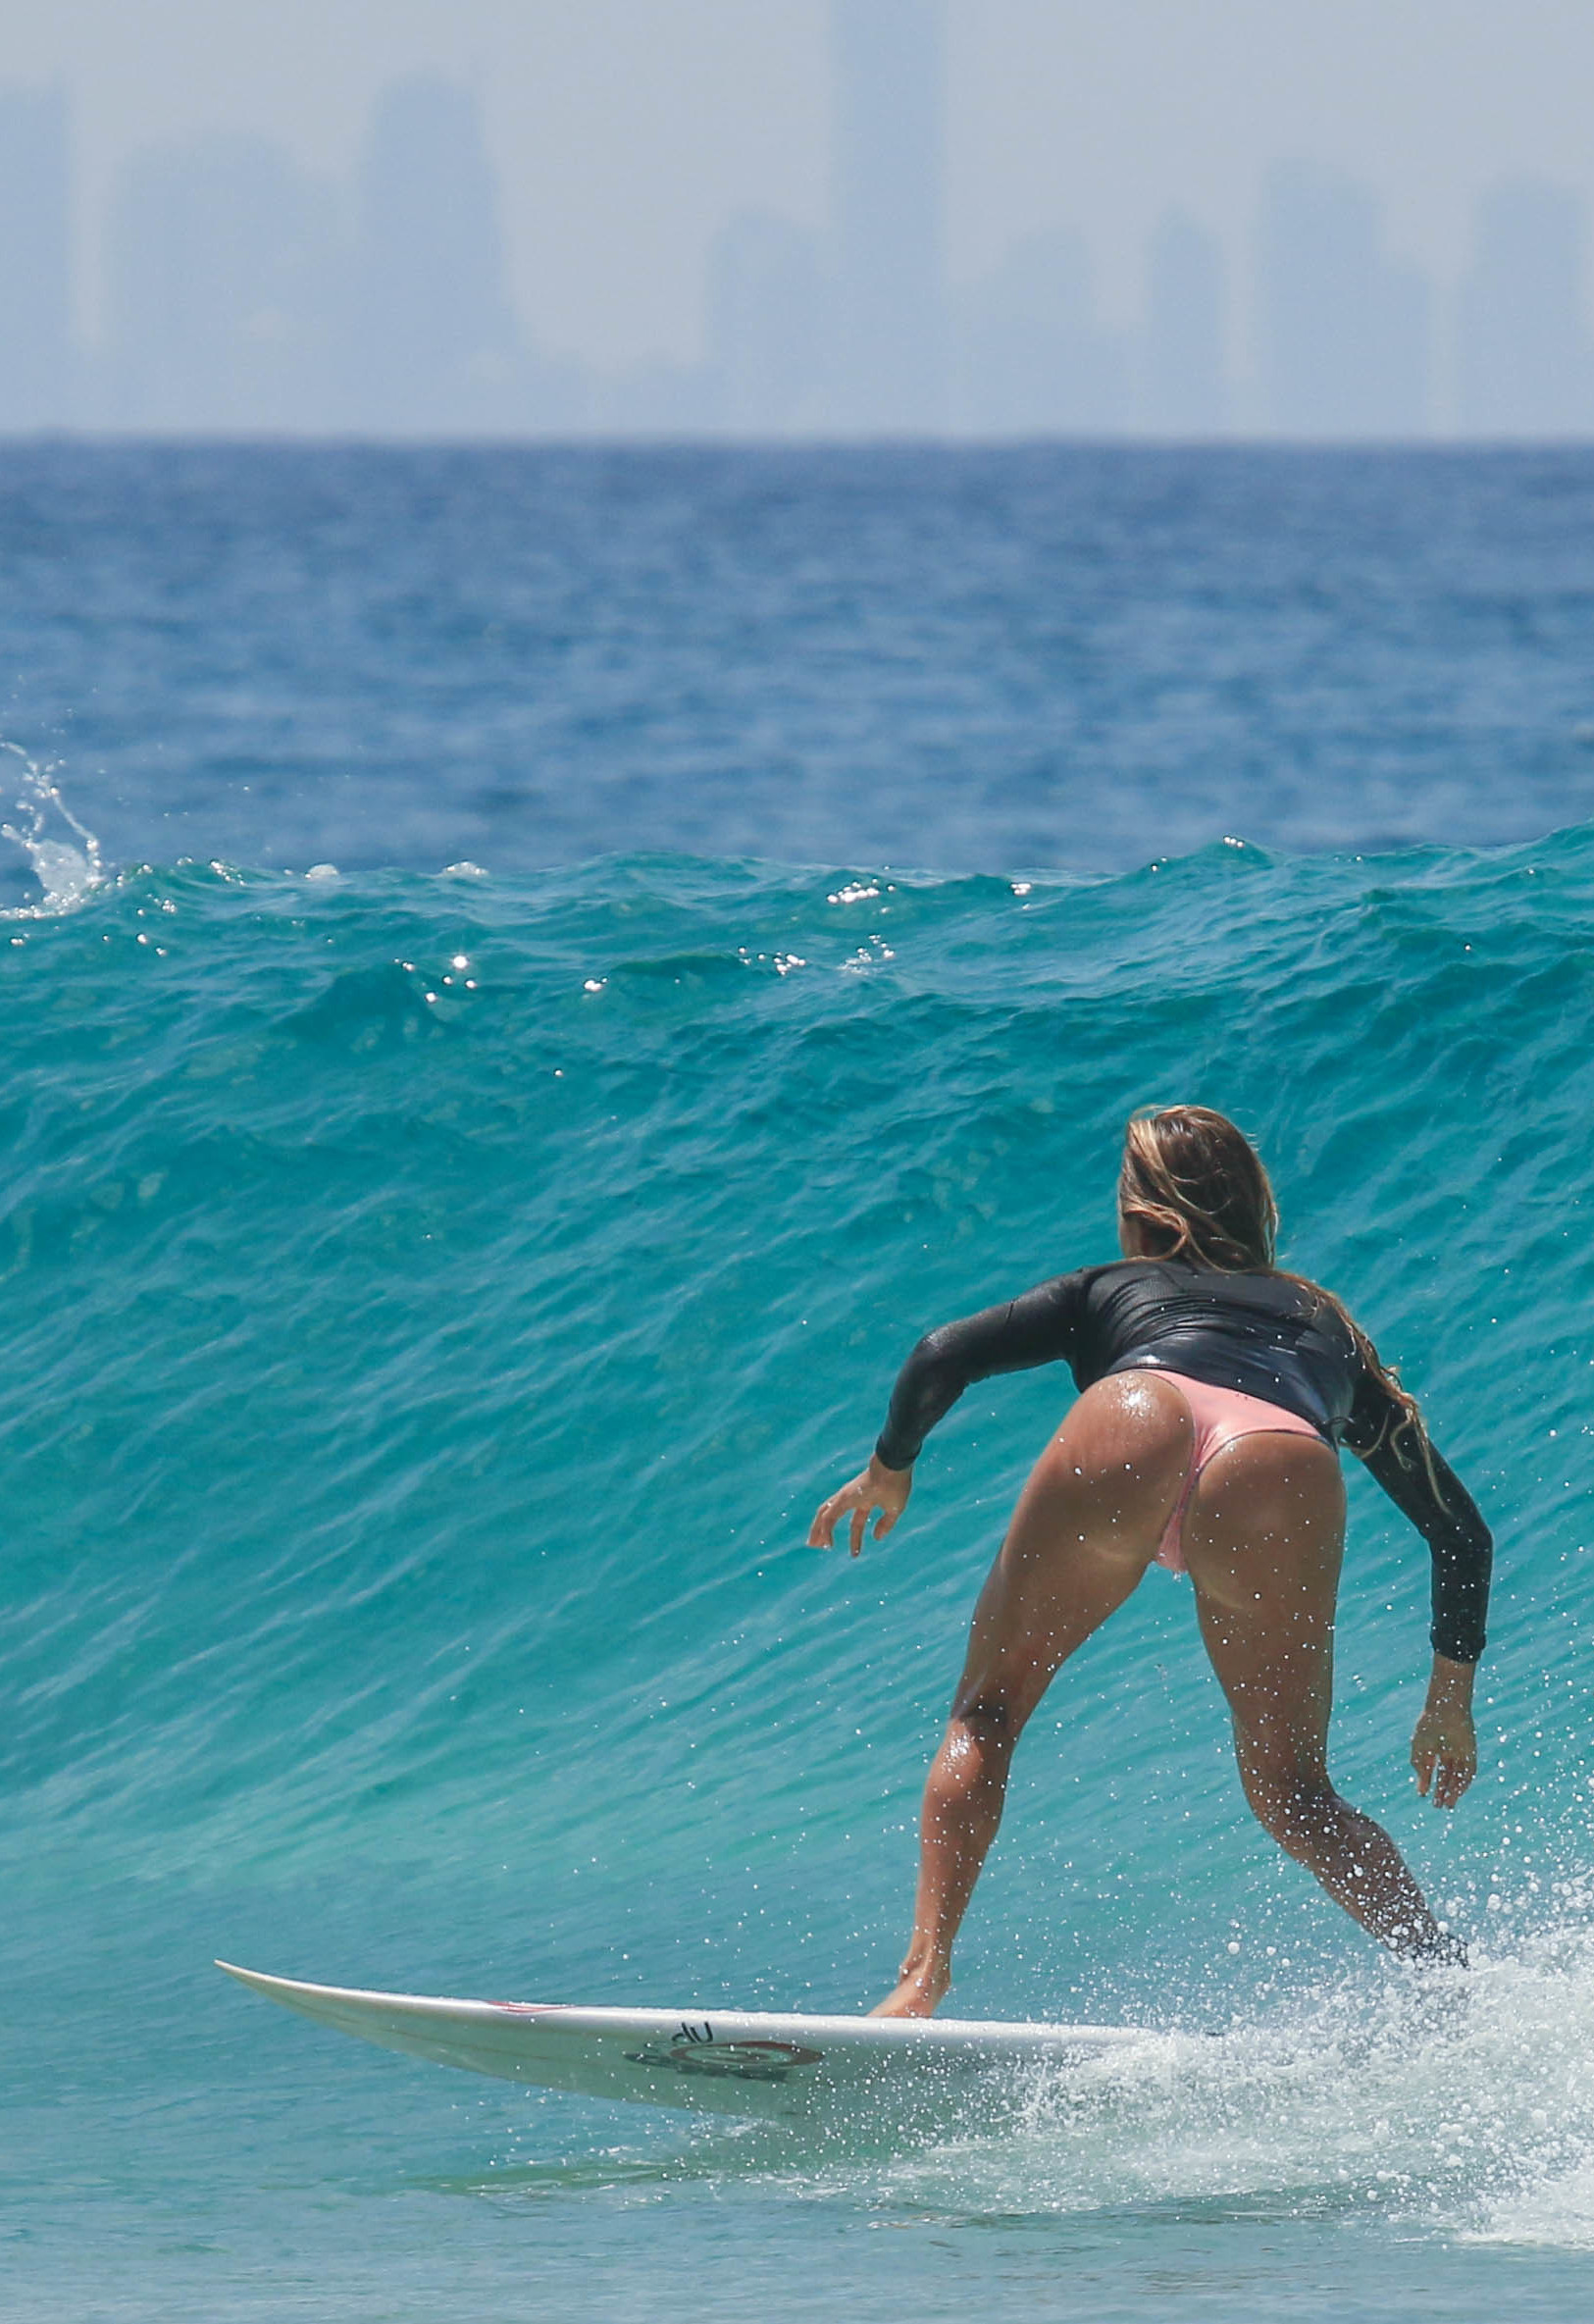 American pro surfer Alana Blanchard.